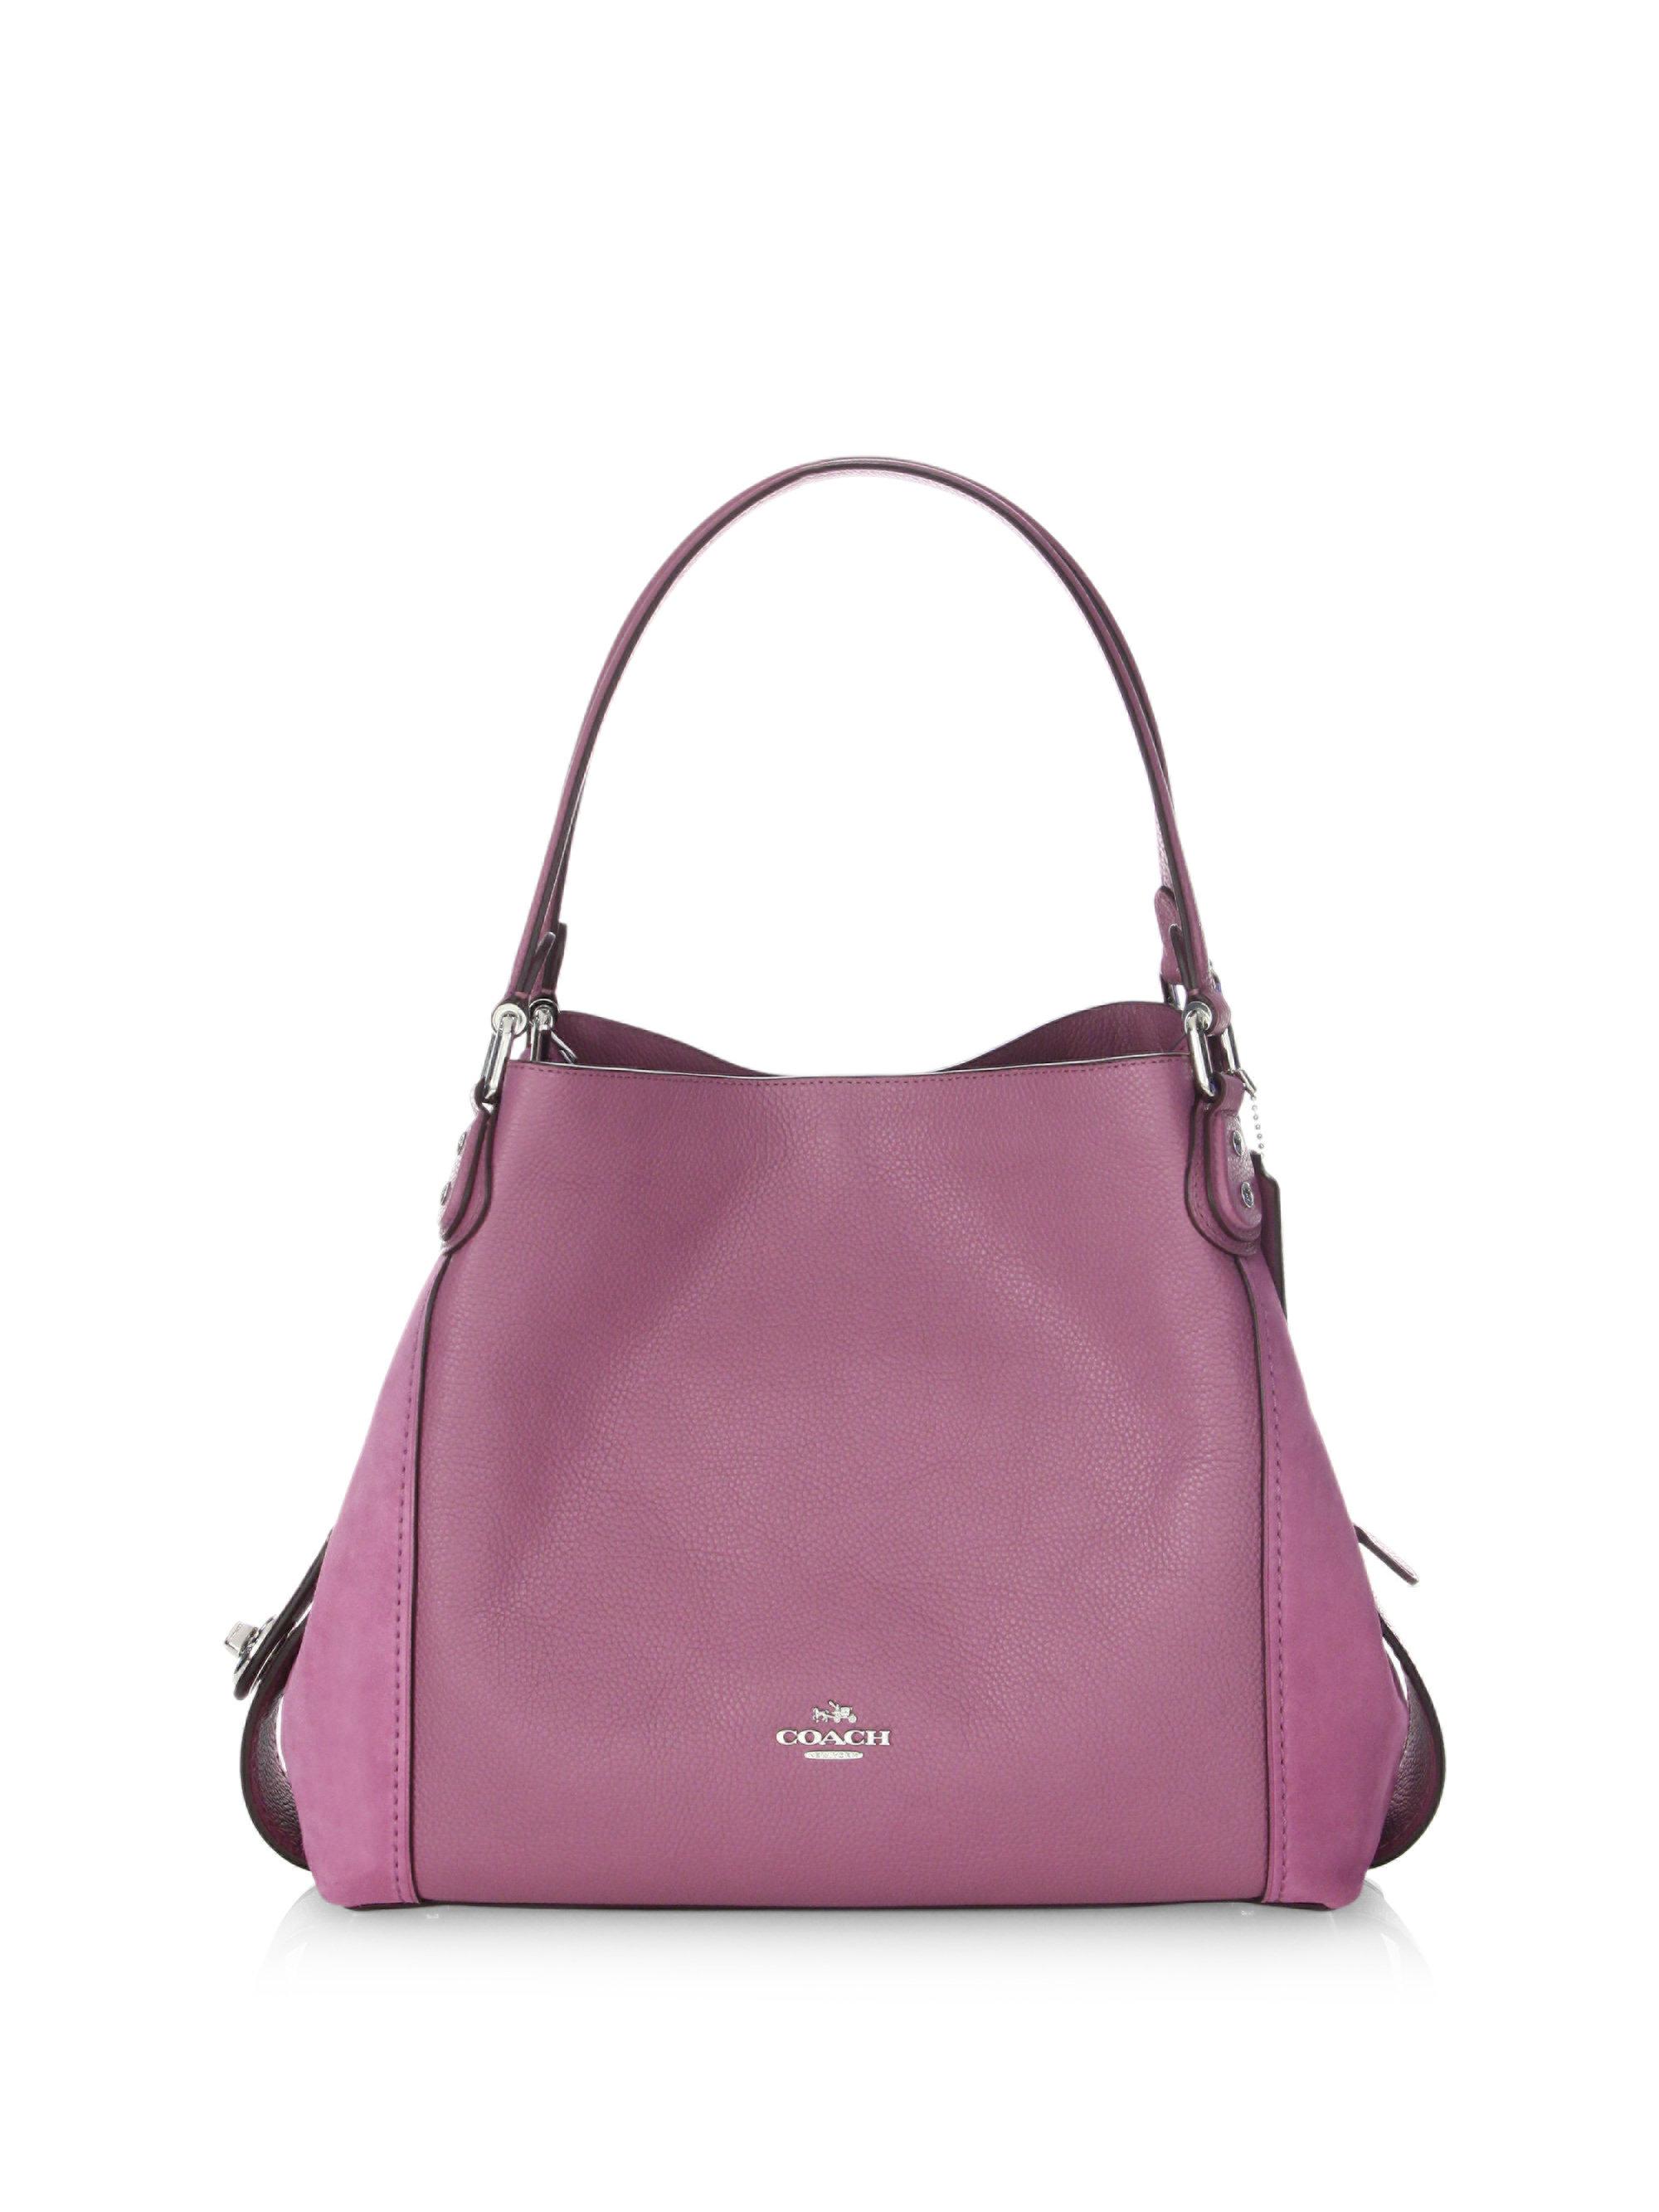 COACH Edie Leather Shoulder Bag in Pink - Lyst